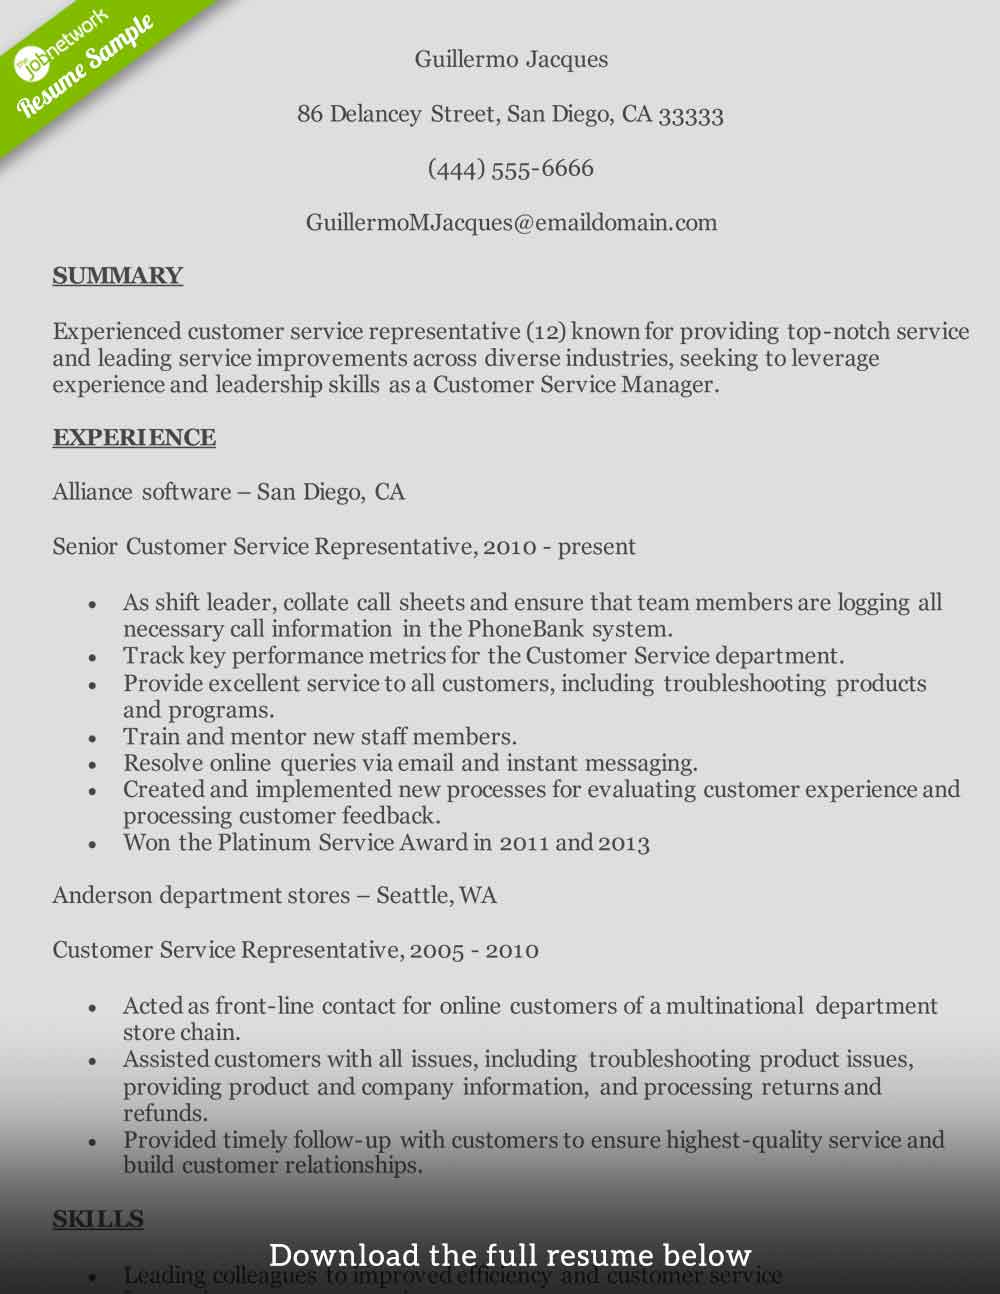 Resume For Customer Service Customer Service Resume Midlevel resume for customer service|wikiresume.com